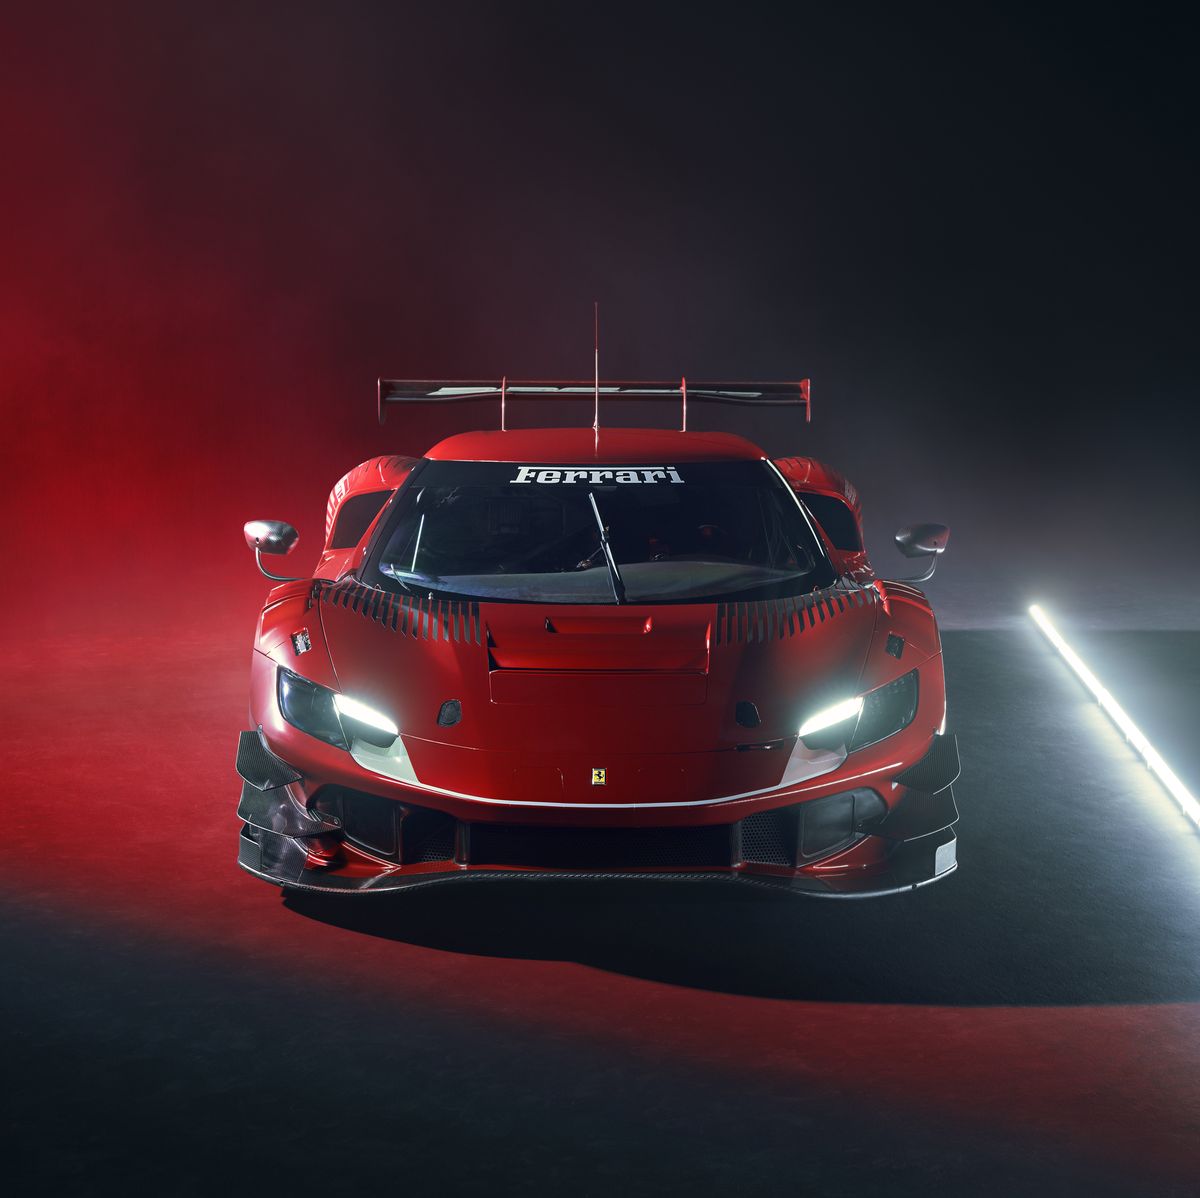 Ferrari Gt3 Race Car Revealed